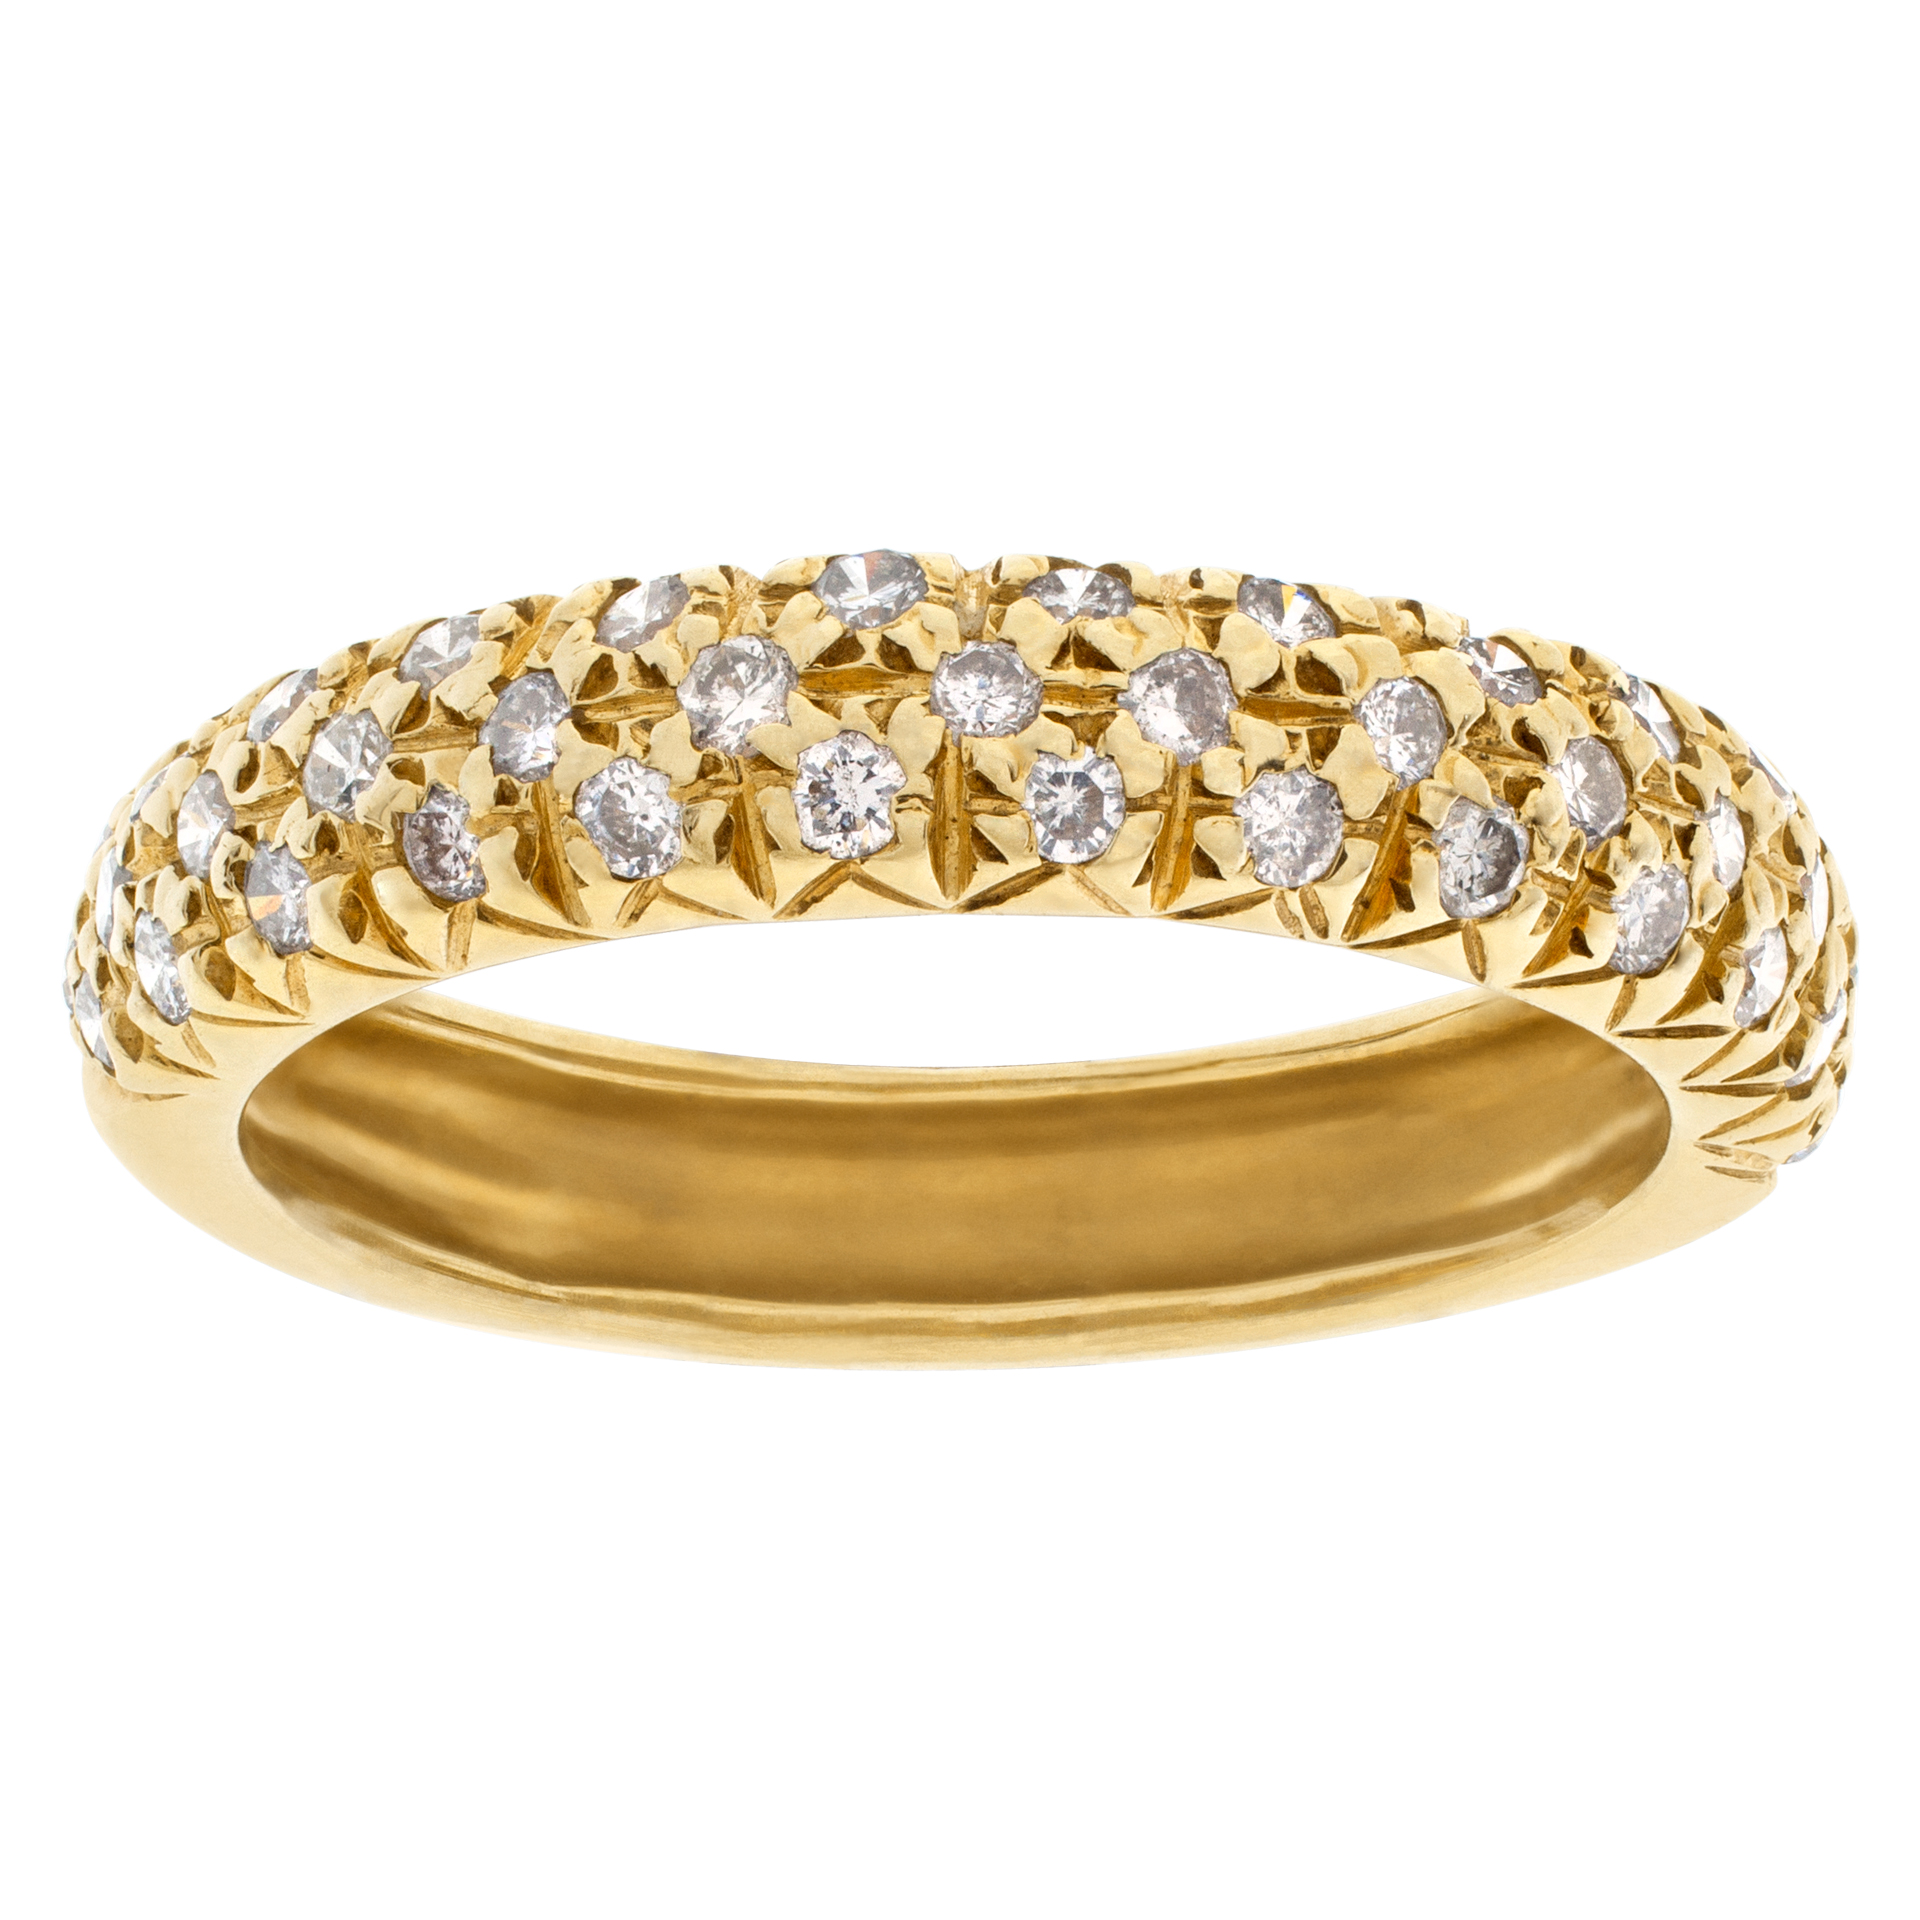 Precious pavé diamond band in 14k yellow gold. 0.80 carats in diamonds. Size 6